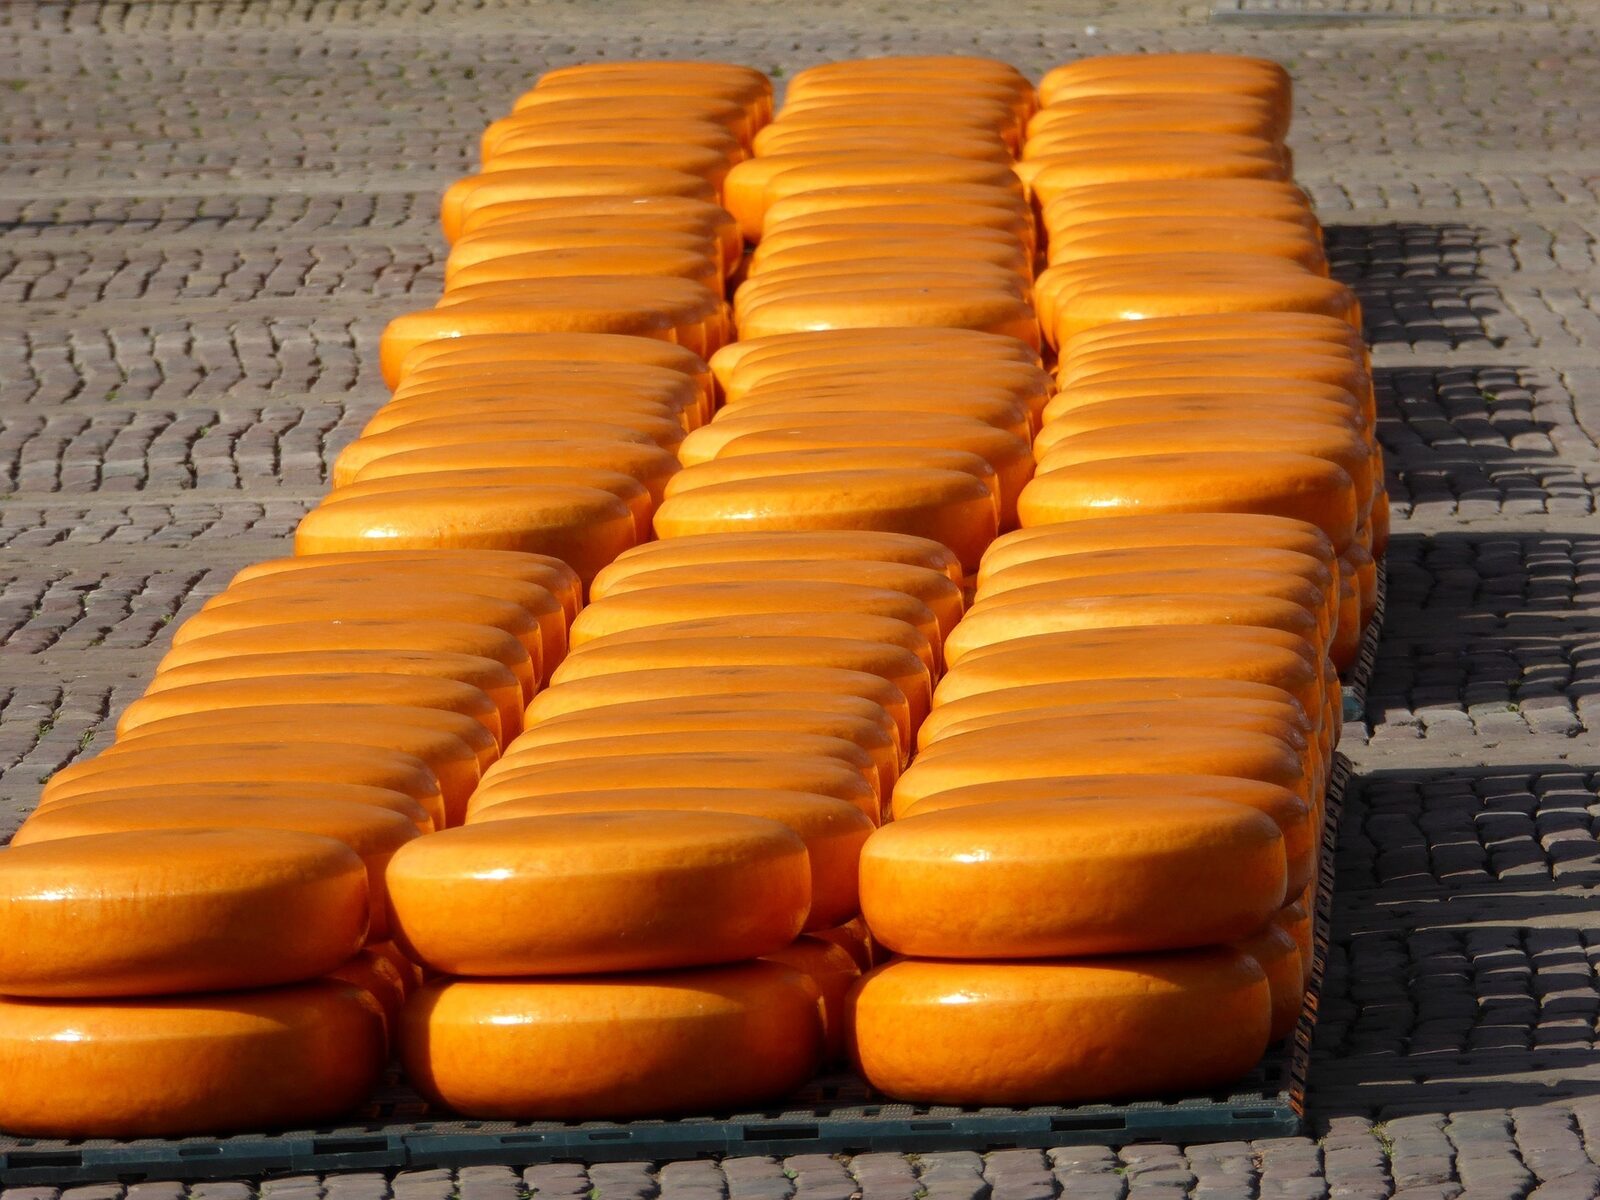 Cheese Market in Alkmaar